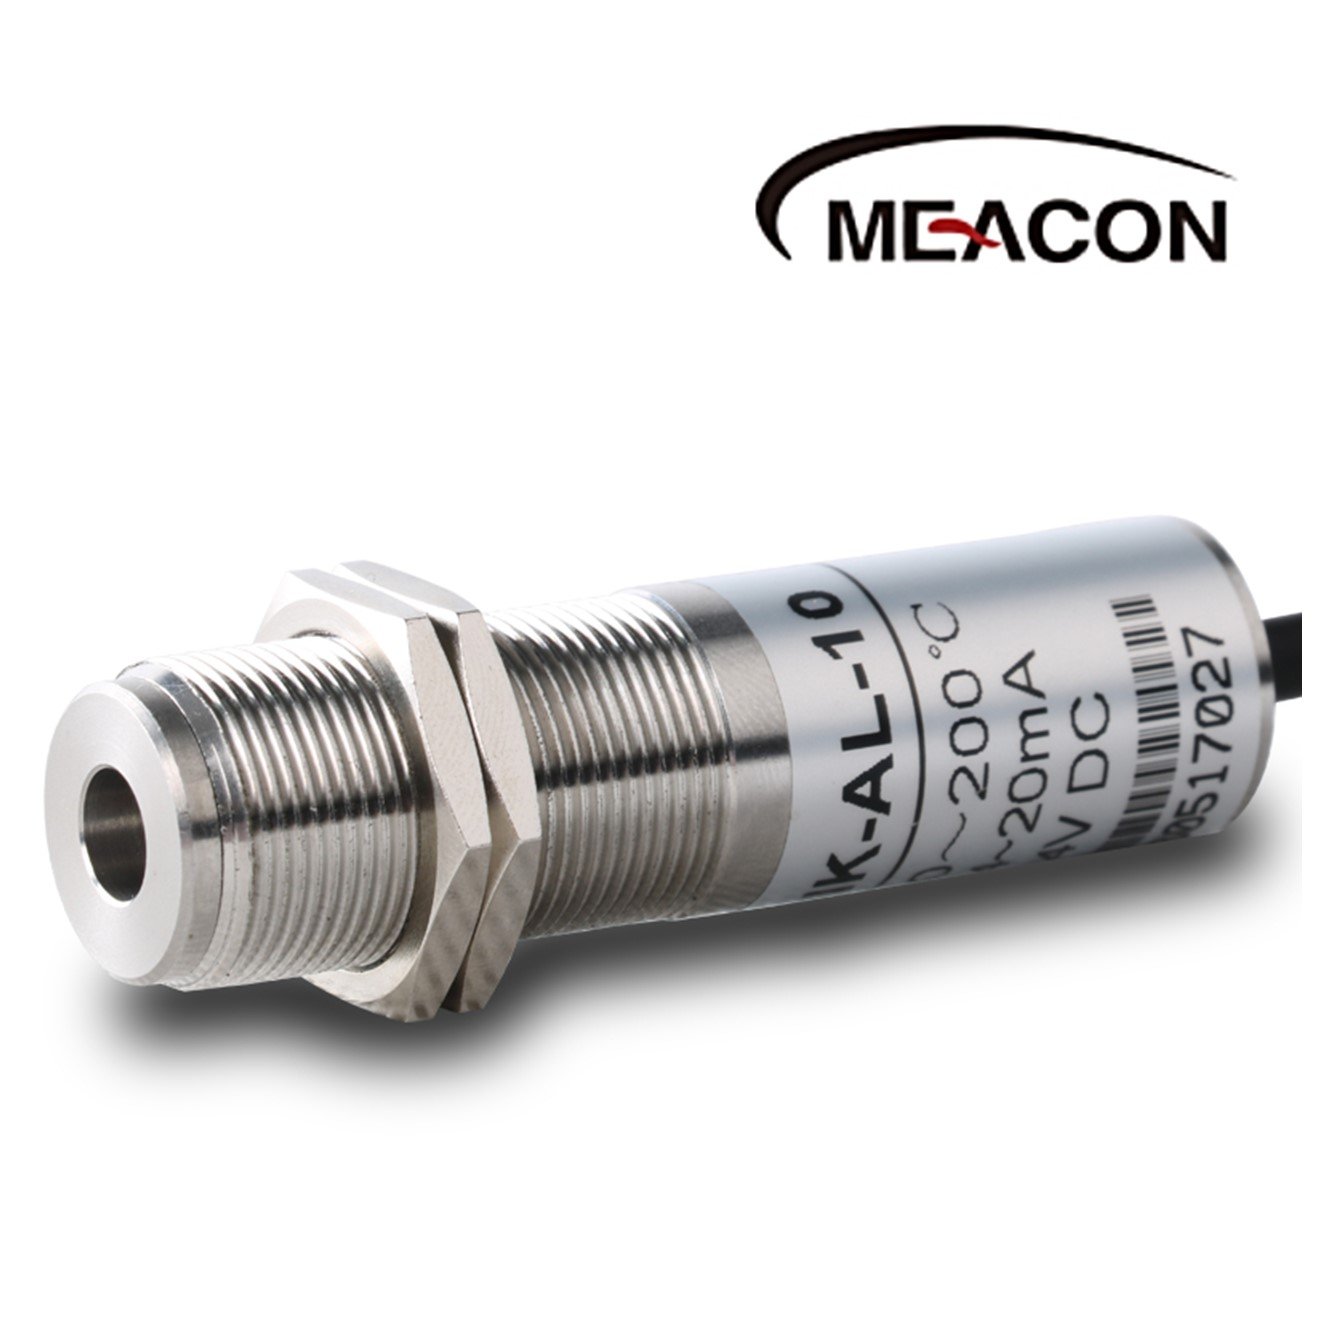 Meacon MIK-AL-10 เซนเซอร์วัดอุณหภูมิแบบอินฟราเรด (ย่าน 0-500 ℃) (Output 4-20 mA) (Supply 24VDC) Infrared Temp Sensor @ ราคา